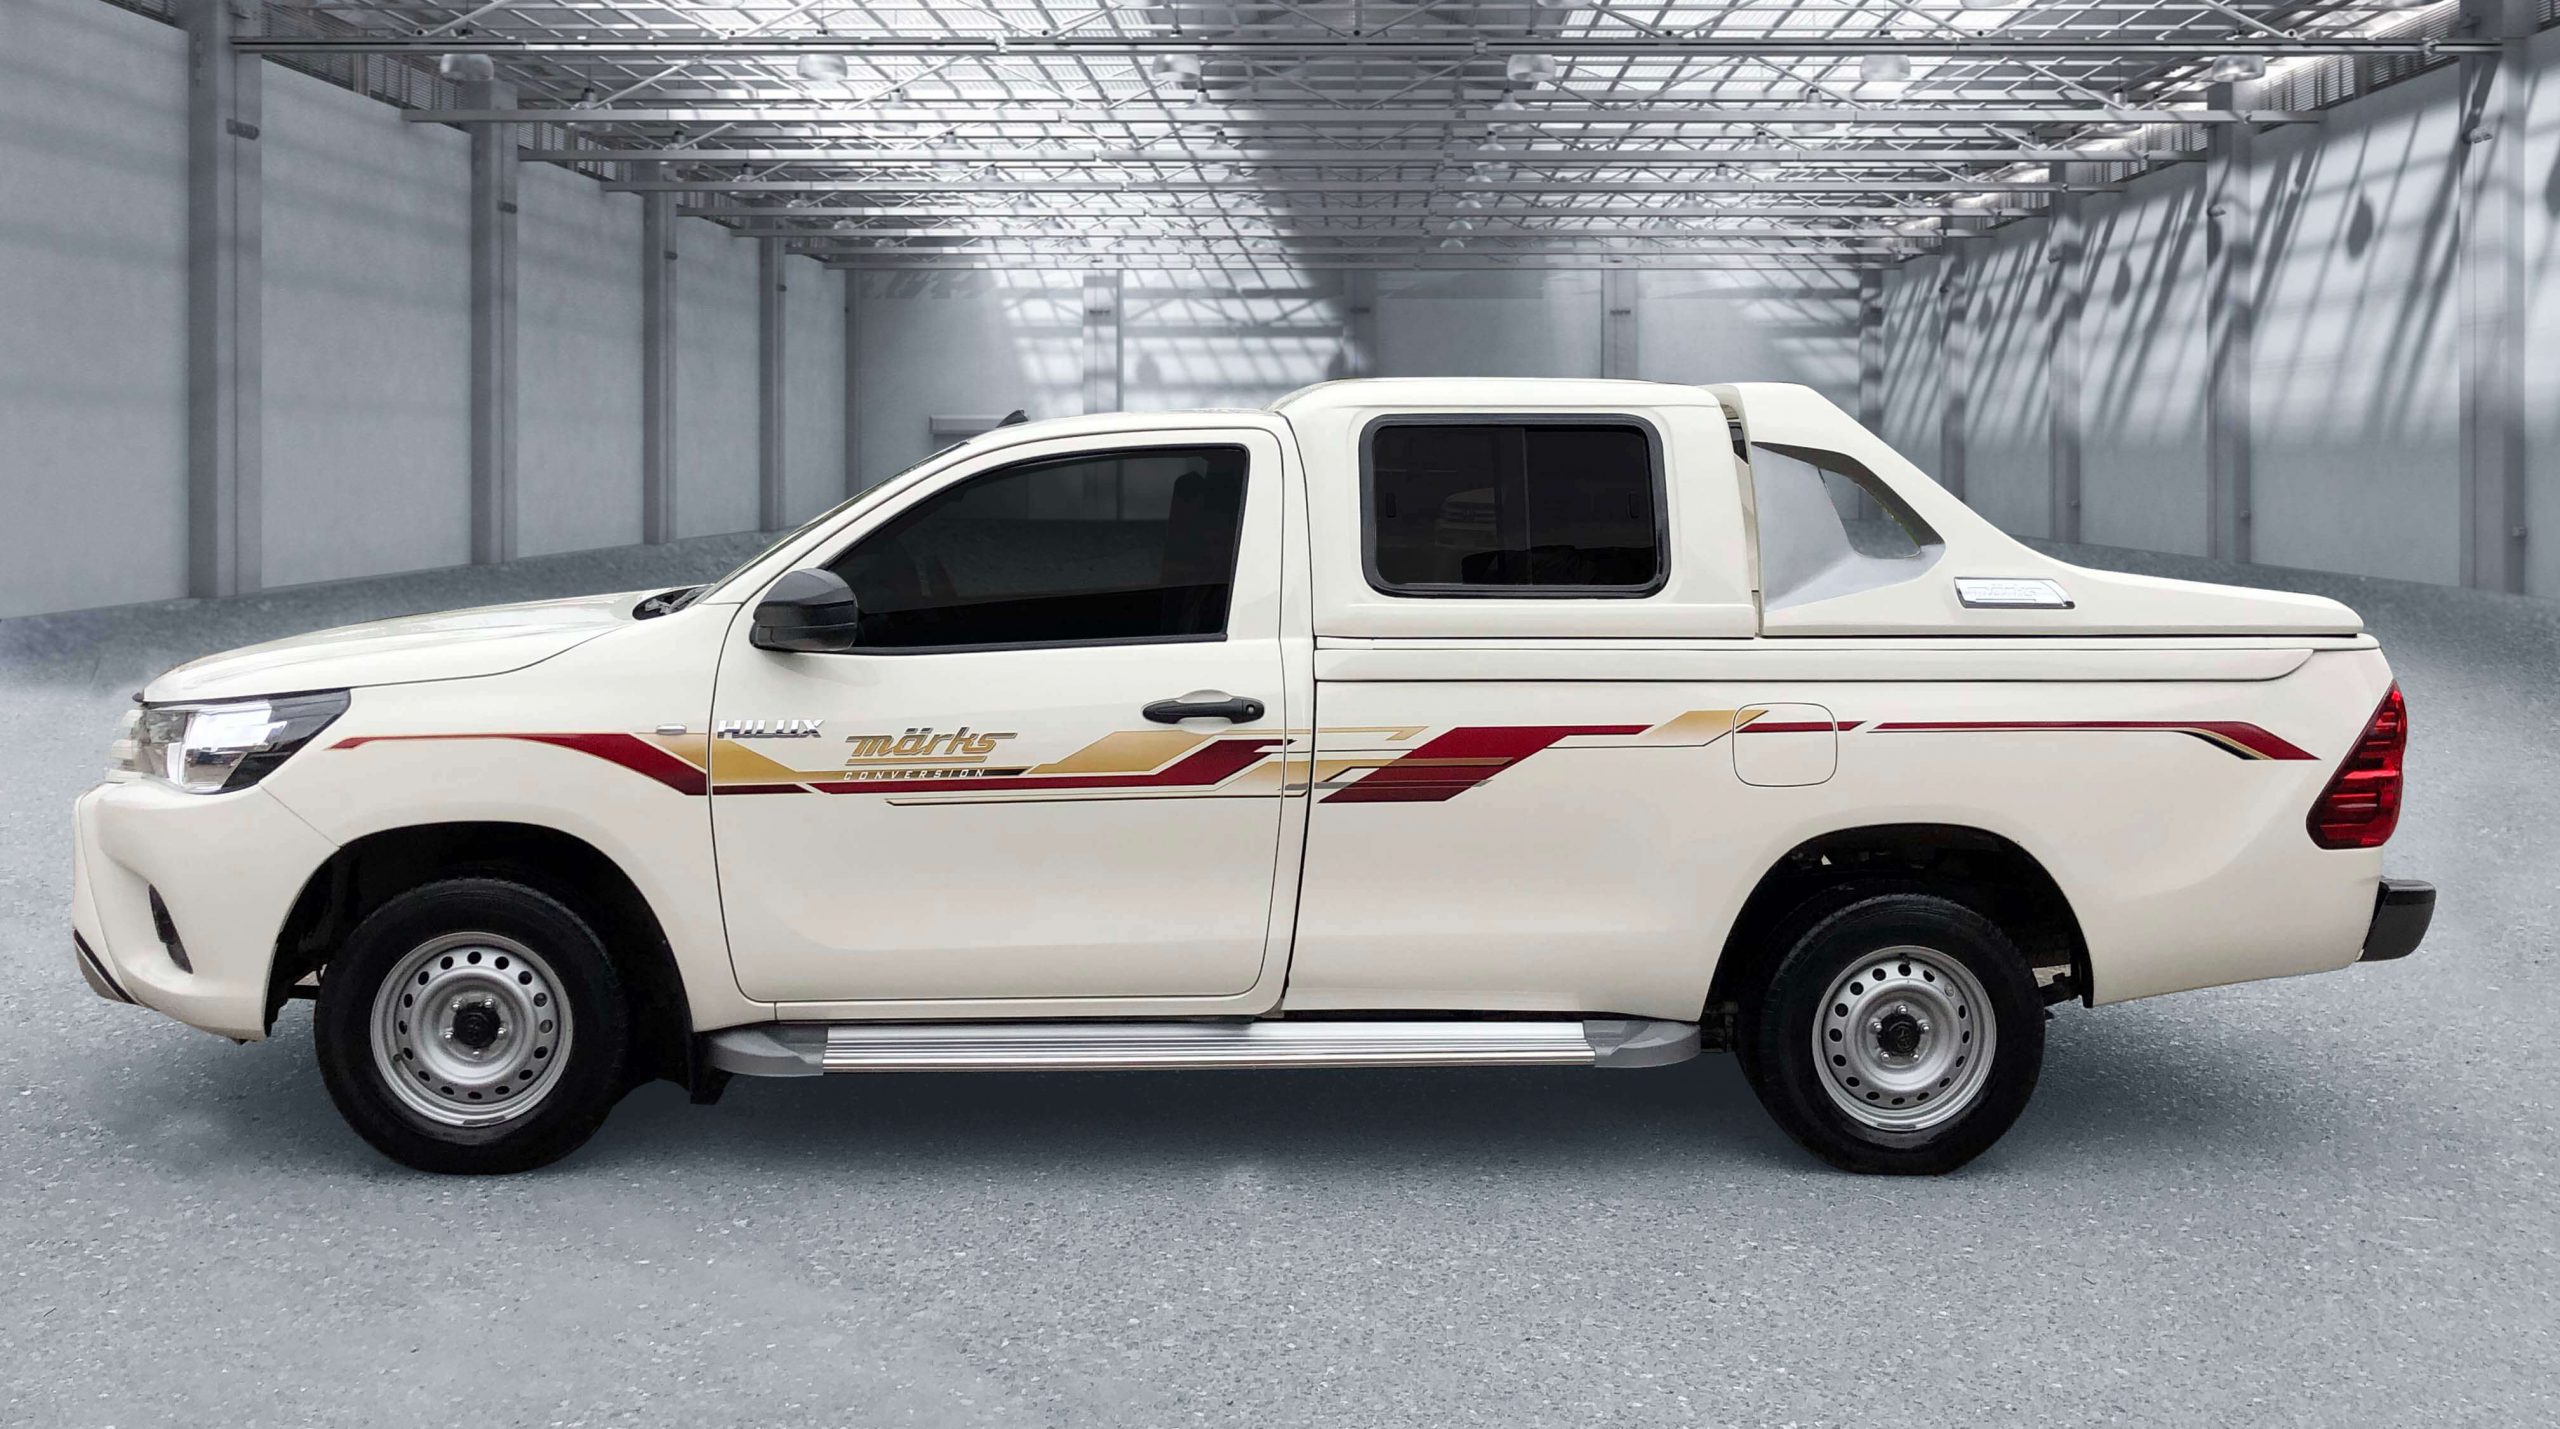 Customized Vehicles - Pickup Canopy & Ambulance Manufacturer